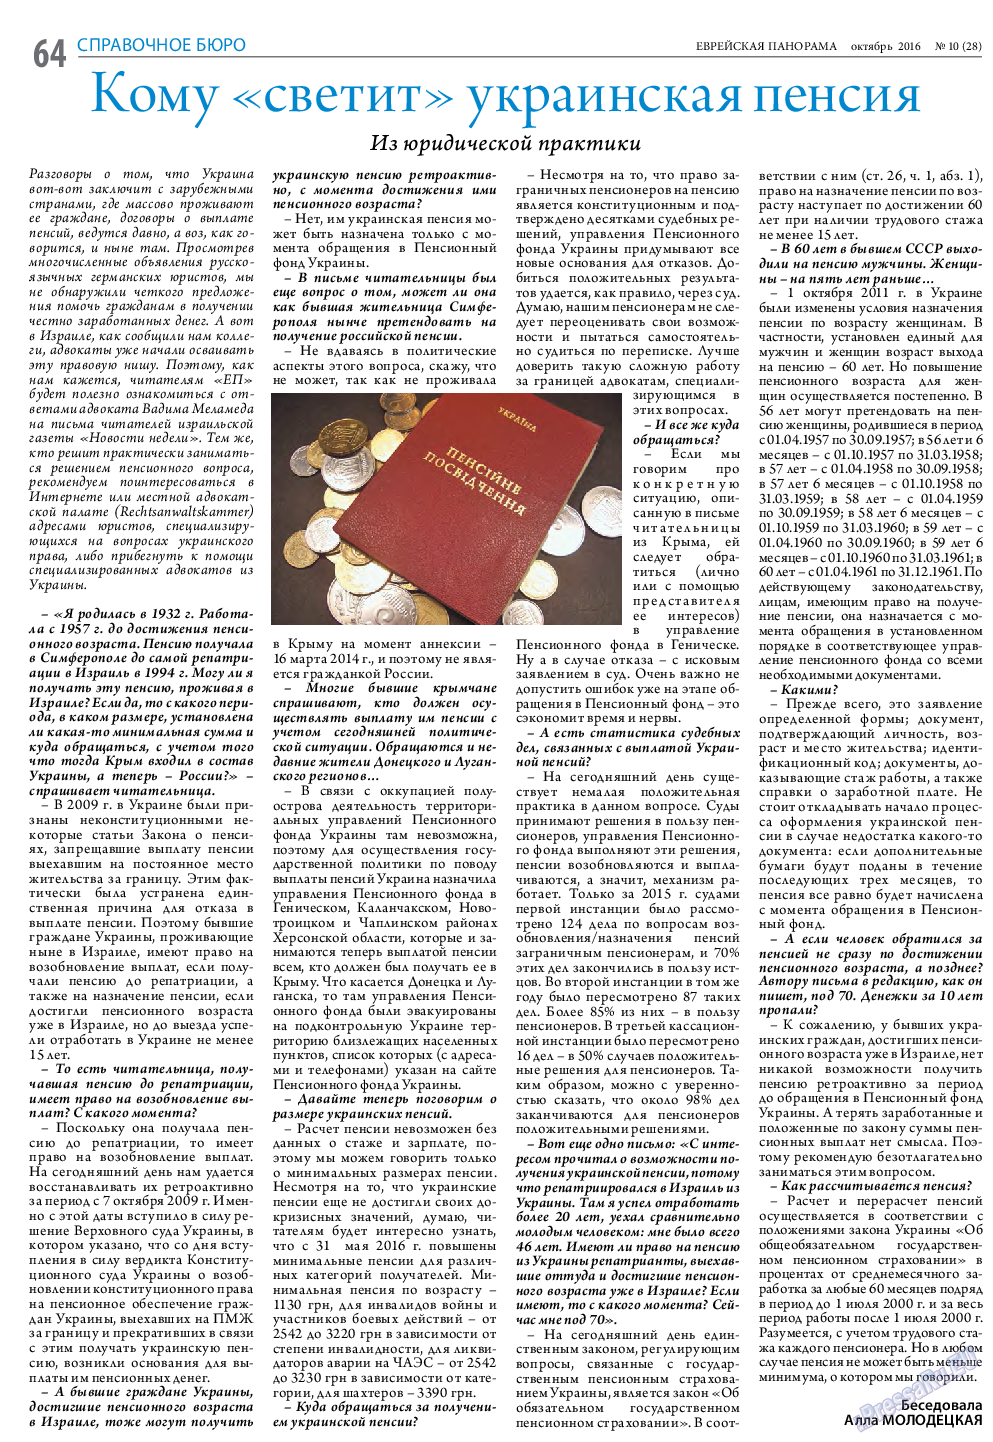 Еврейская панорама, газета. 2016 №10 стр.64